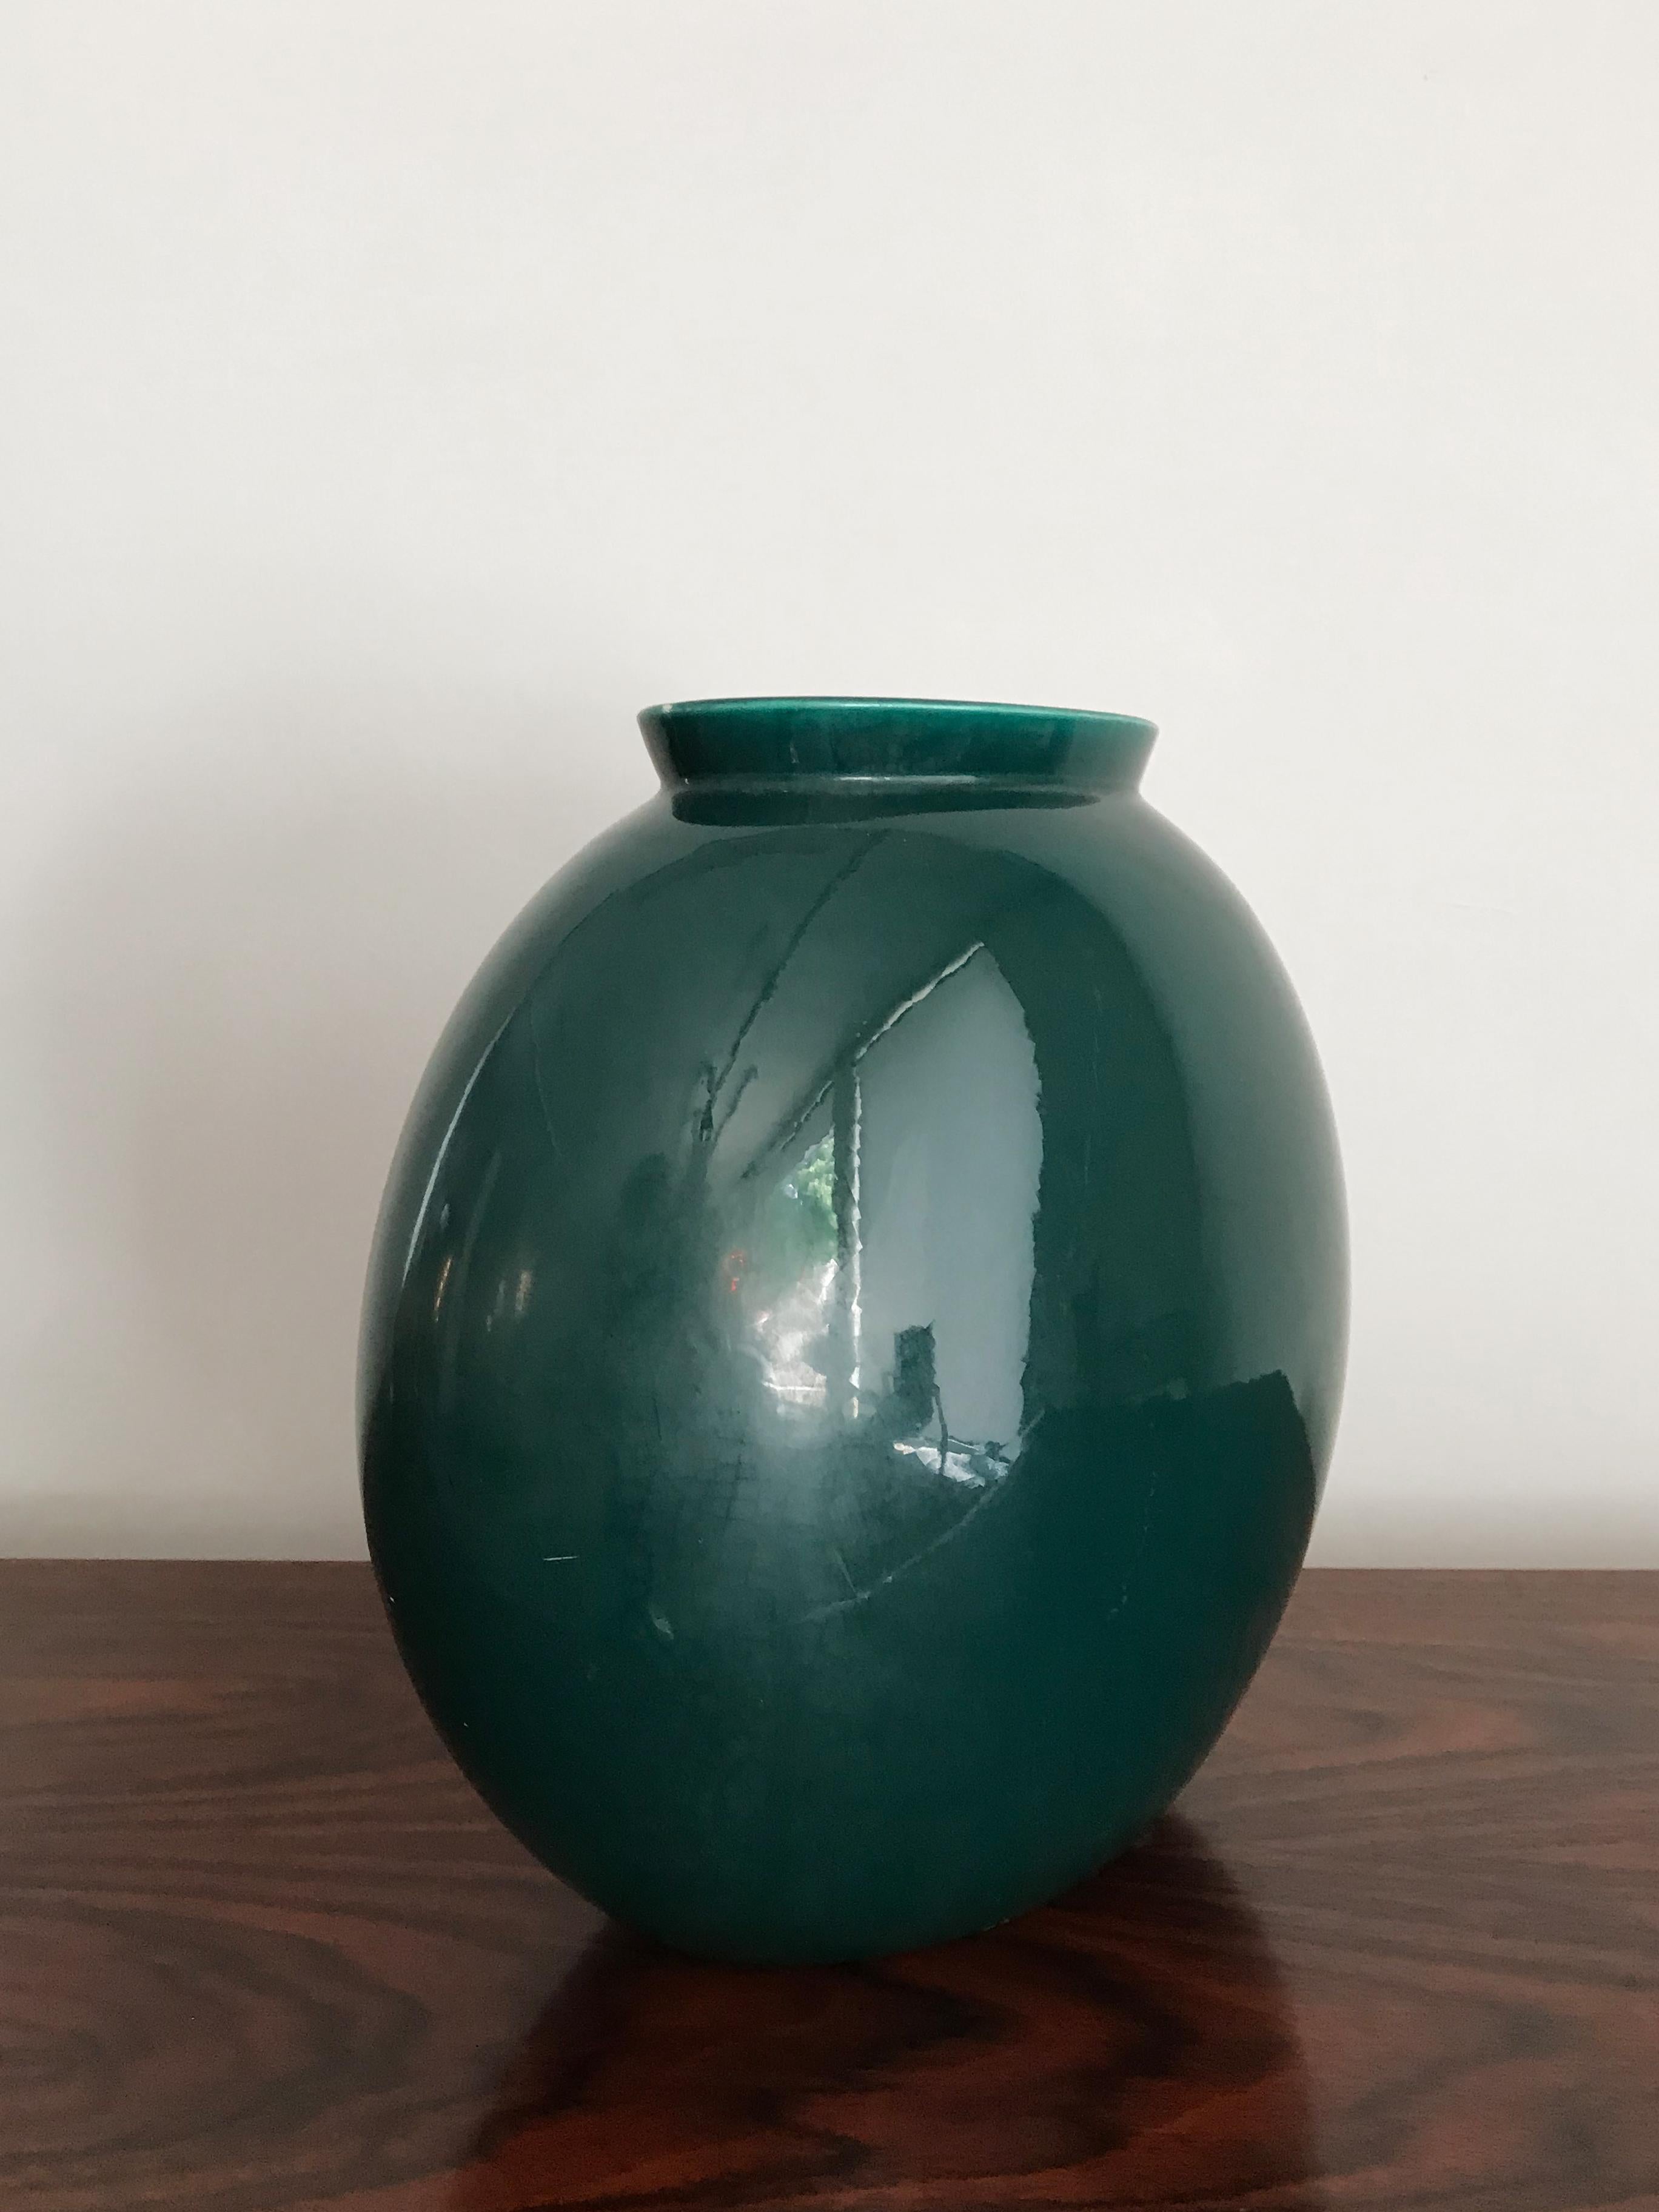 Italian Mid-Century Modern design ceramic vase model “1316/4” designed by Guido Andloviz and produced by S.C.I. (Società Ceramica Italiana, Laveno) with green semi-gloss enamel, 1950s
Marked “Lavenia 9-51” and with the graphic symbol of the